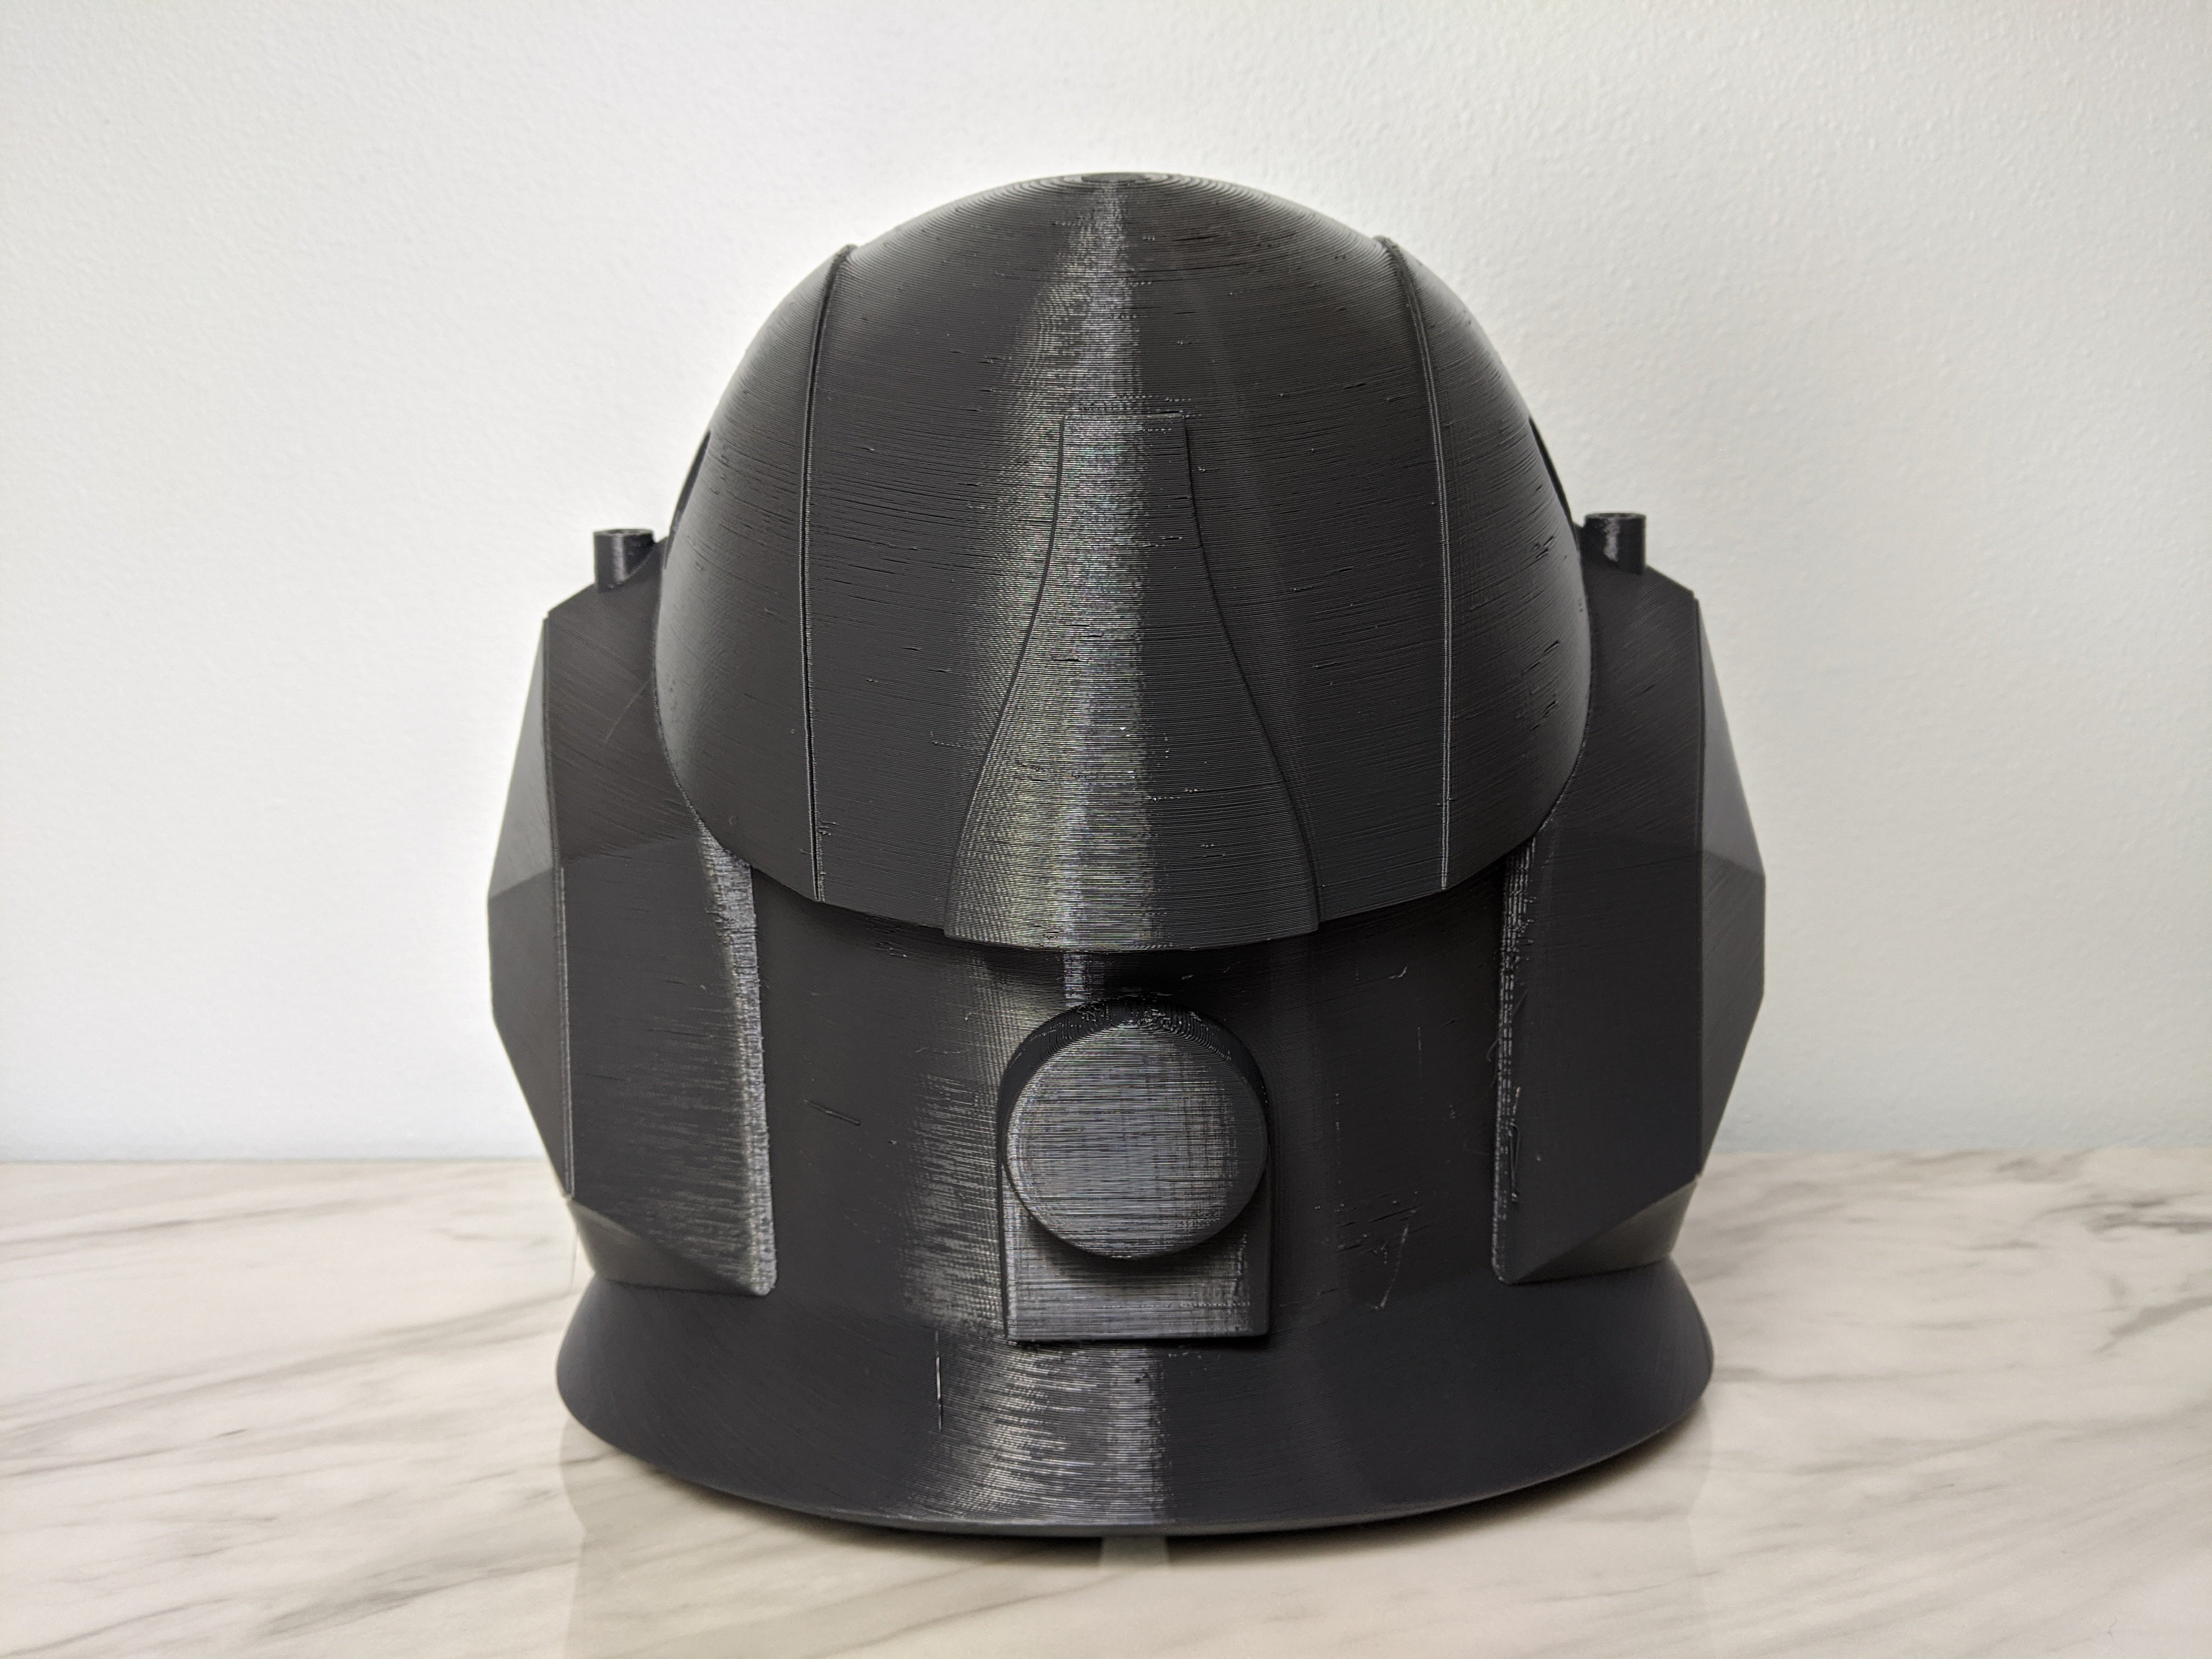 Animated Spec Ops Clone Trooper Helmet - DIY - Galactic Armory